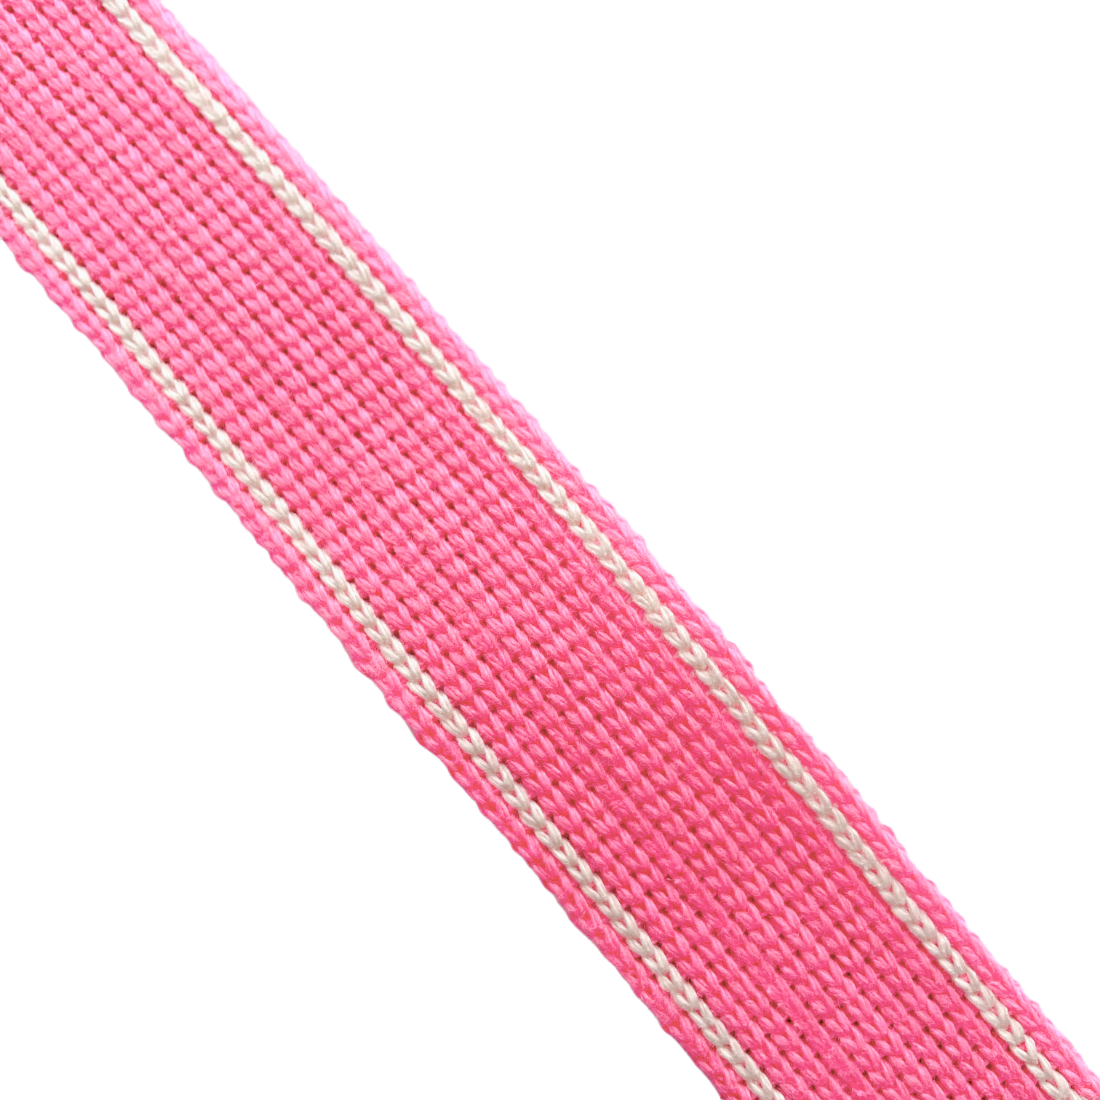 Bag Webbing - 30mm Cotton Blend with Ecru Stripe in Pink